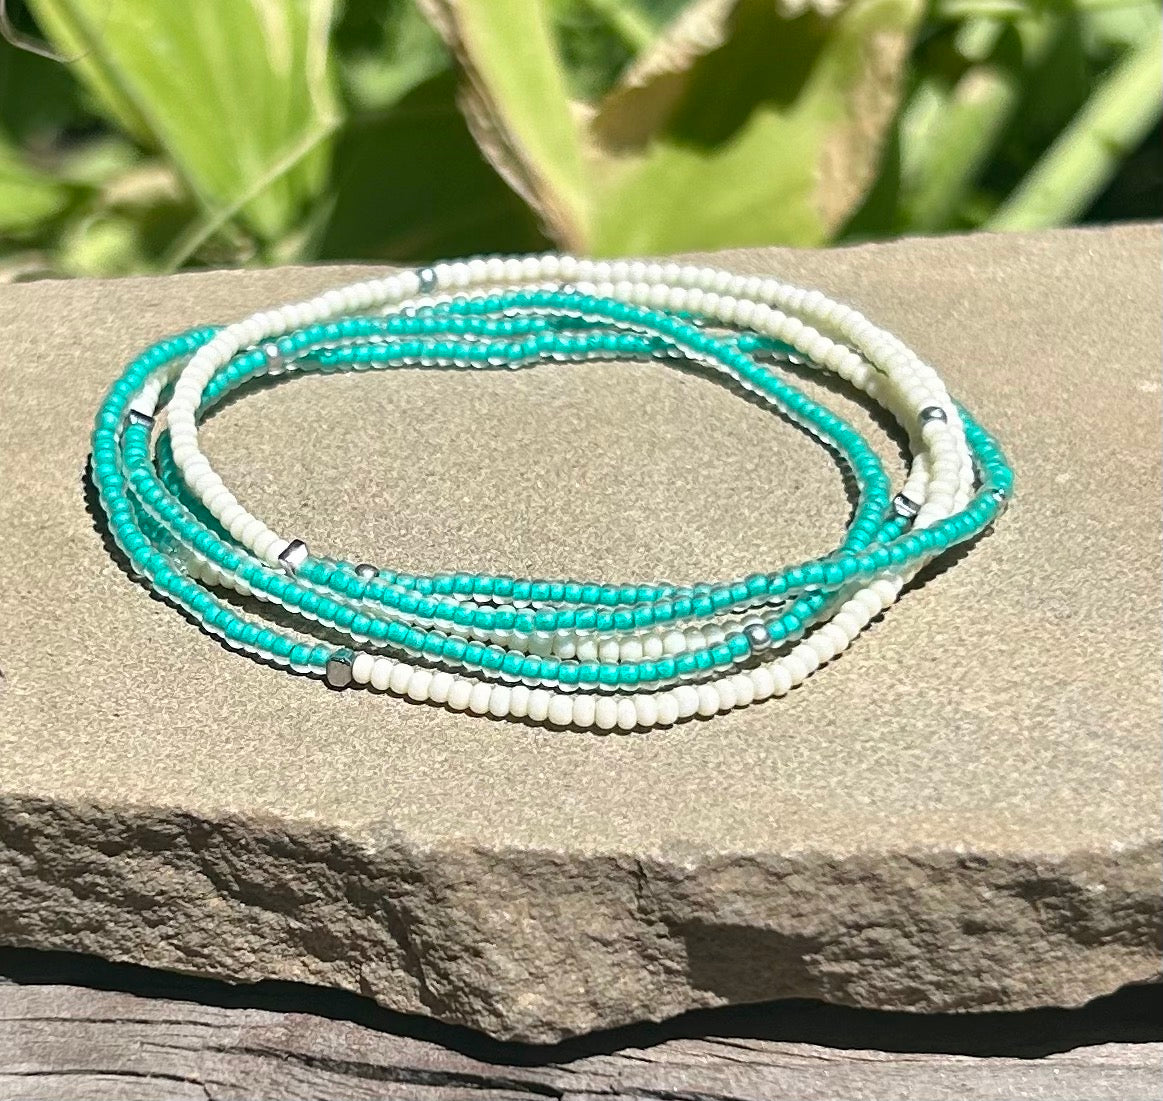 Translucent Turquoise & White Color Vibes Silver-Sprinkle Beaded Boho Wrap Bracelet